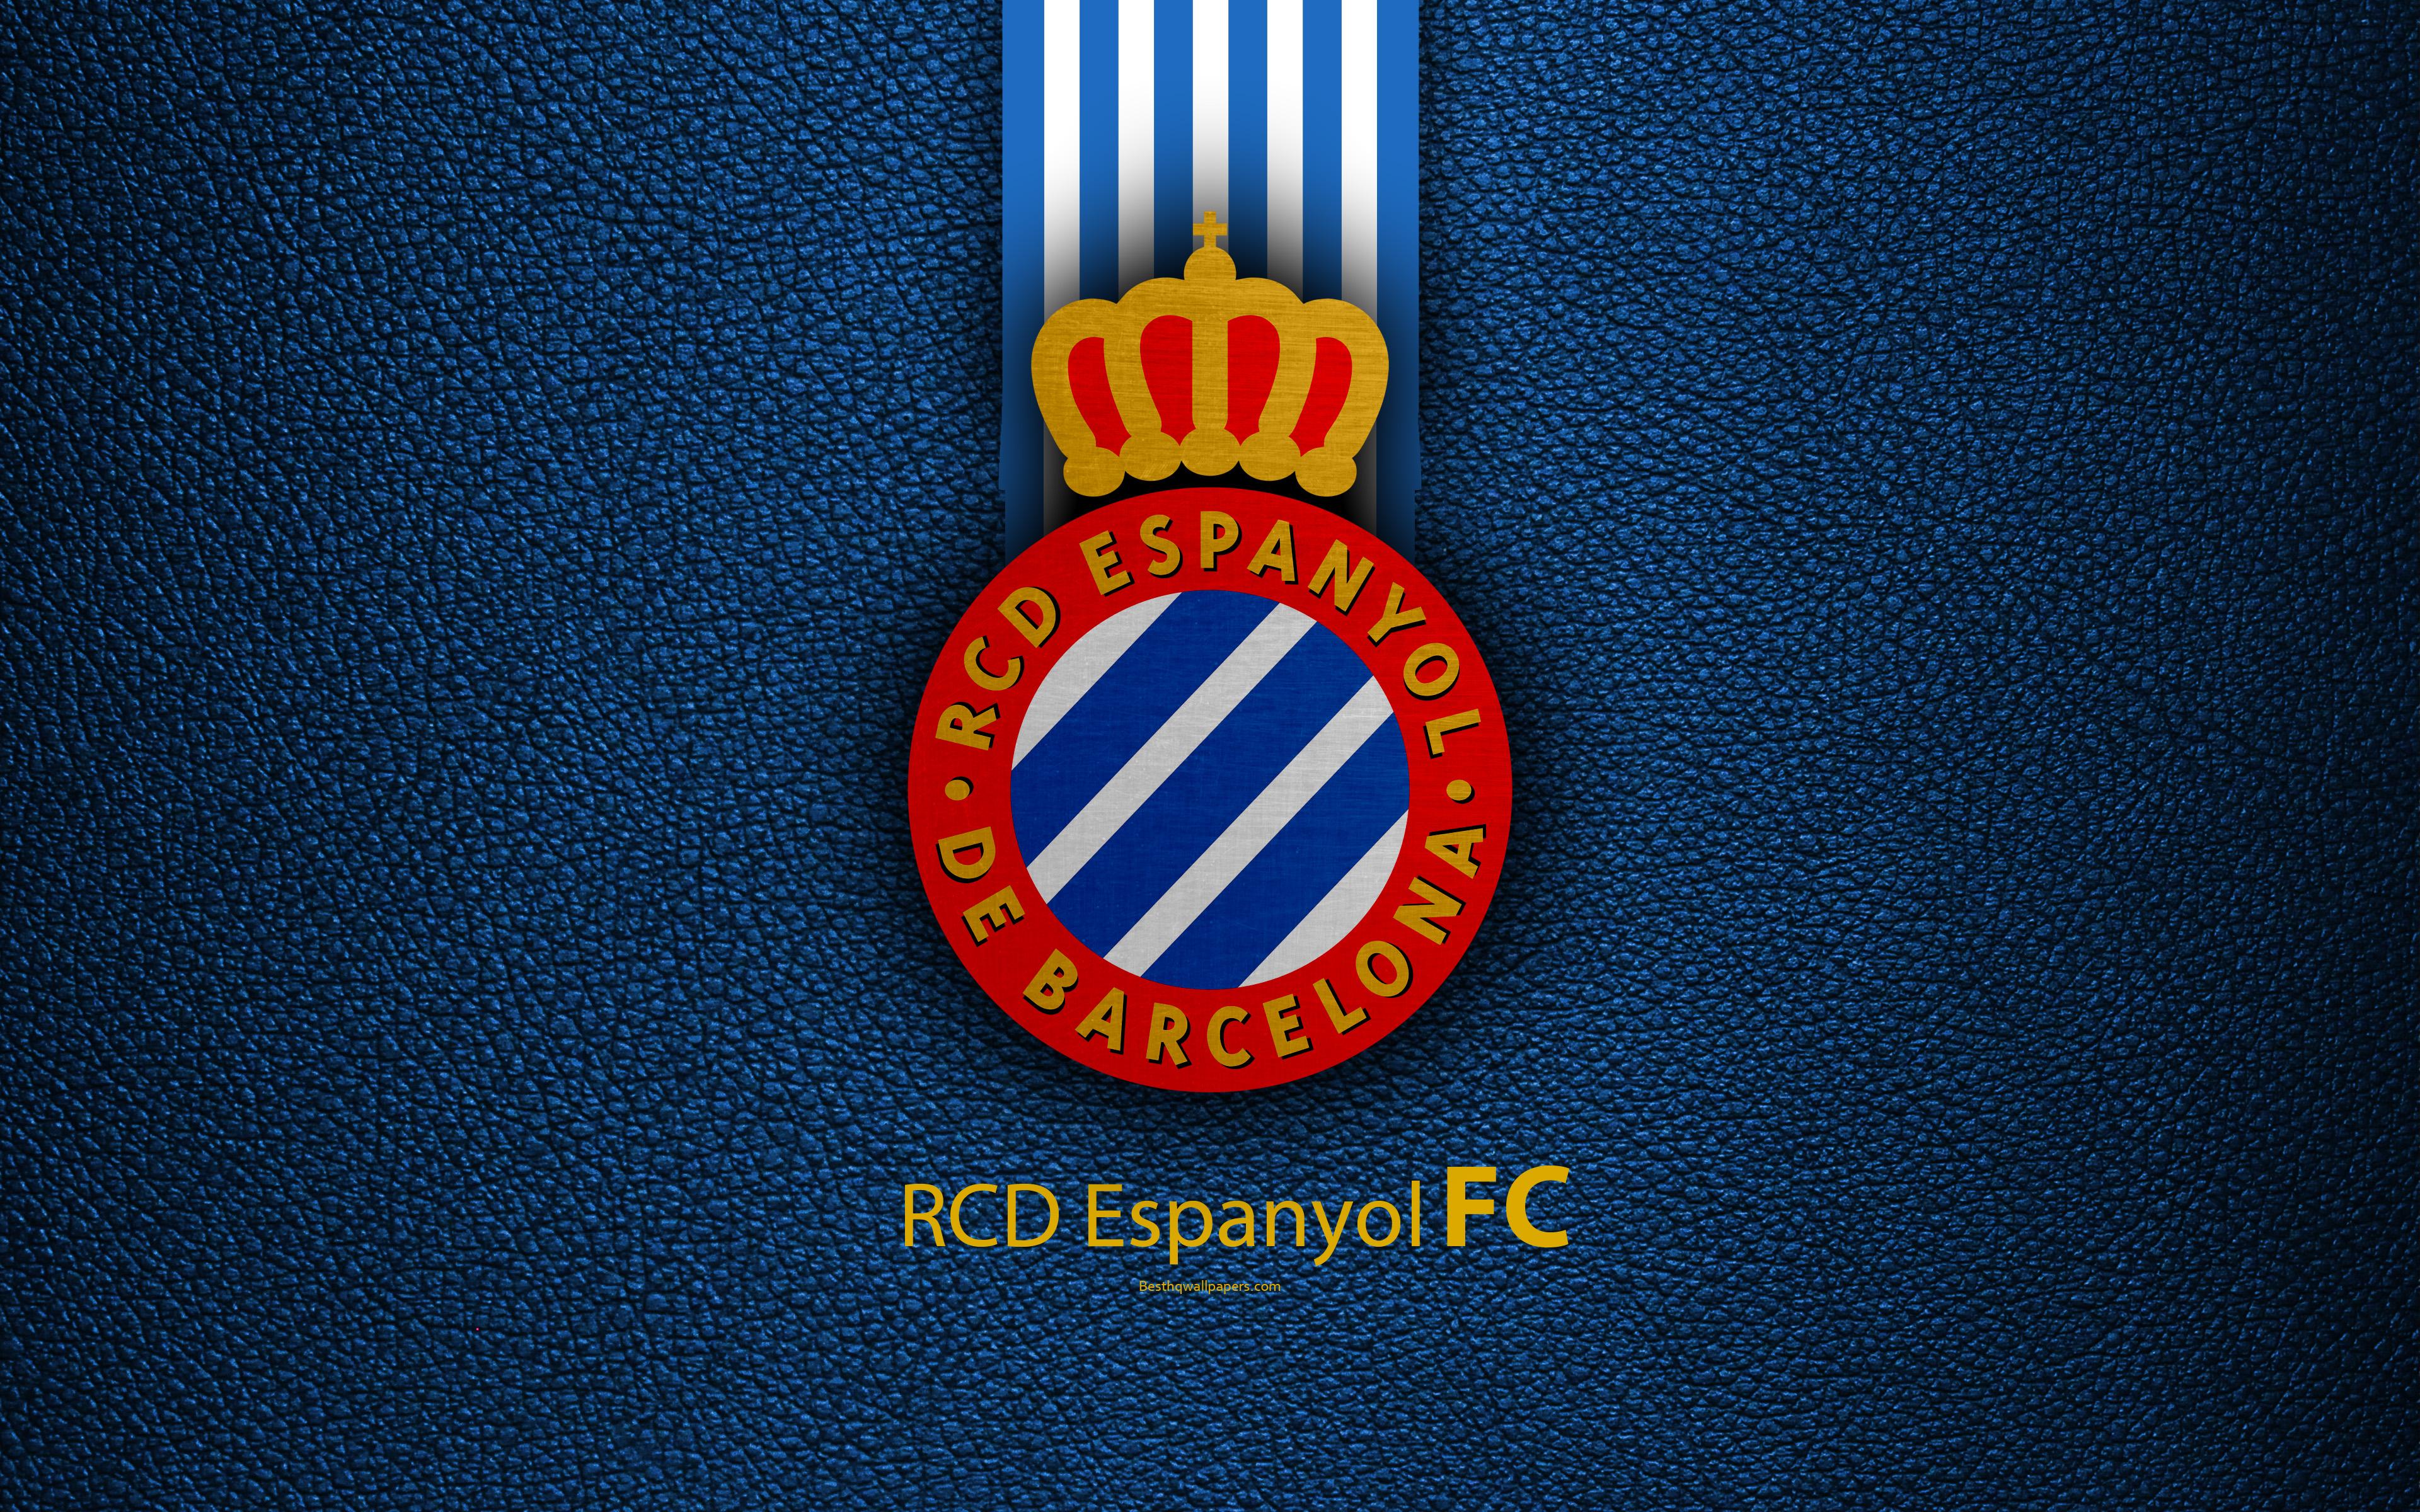 Download wallpaper RCD Espanyol FC, 4K, Spanish football club, La